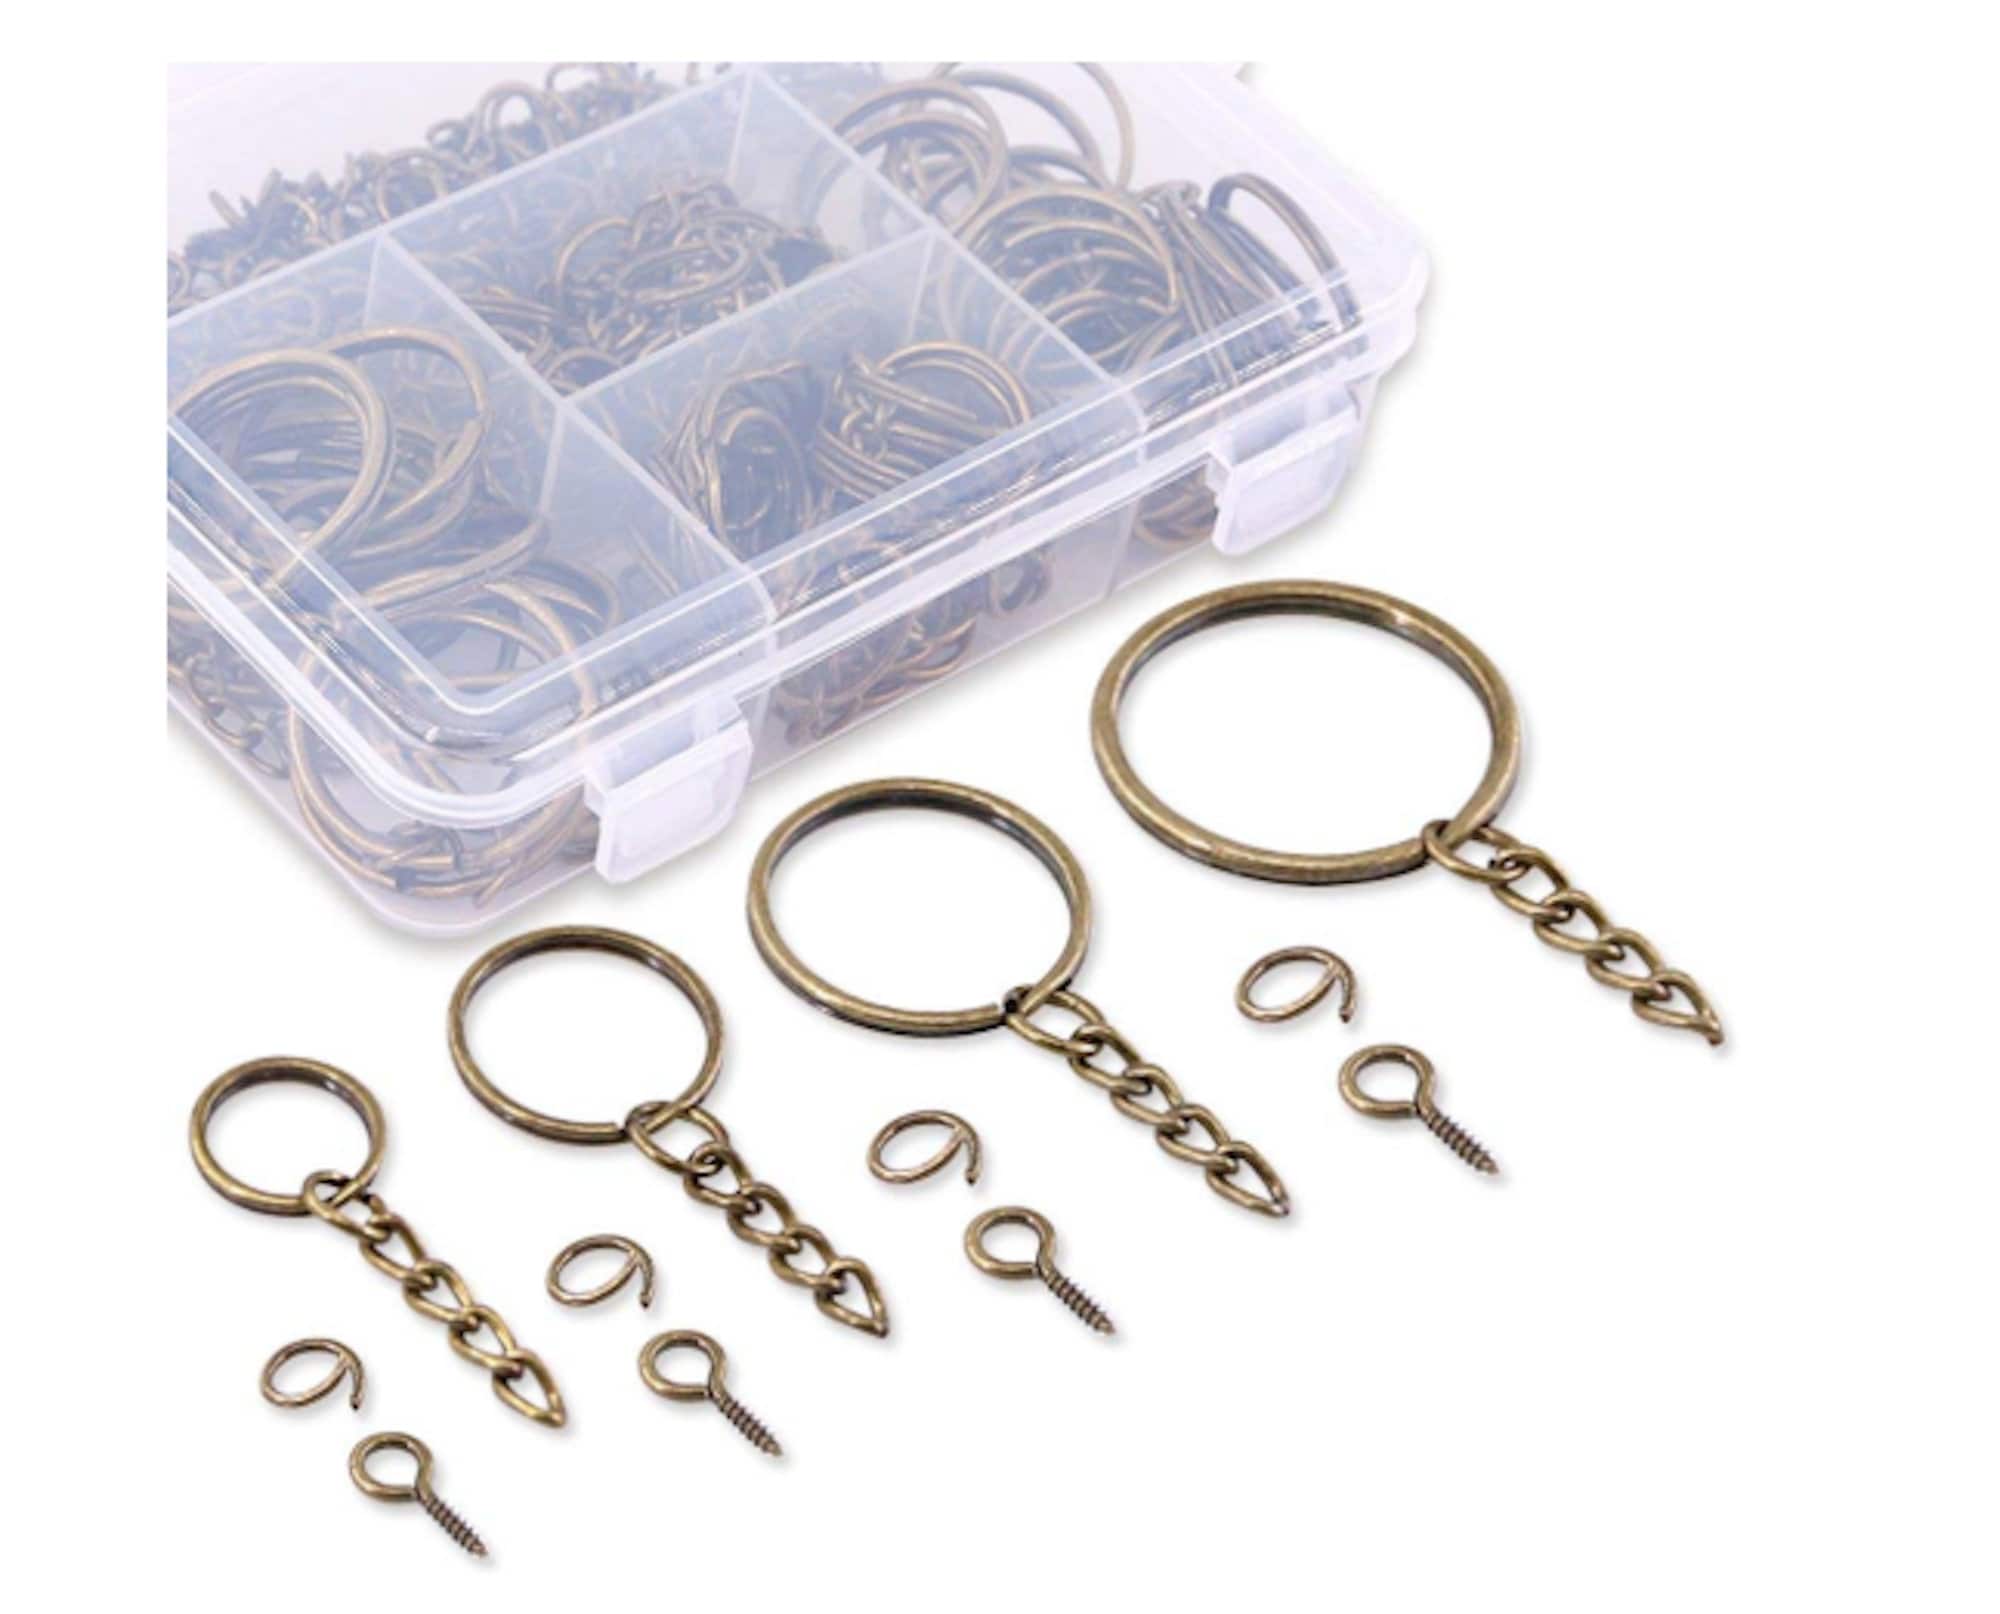 5, 10, 20 Silver Keychain, Silver Keyring, Metal Key Ring, Keyring, Keychain,  Keyring Findings, Keychain Findings, Jewelry Making 